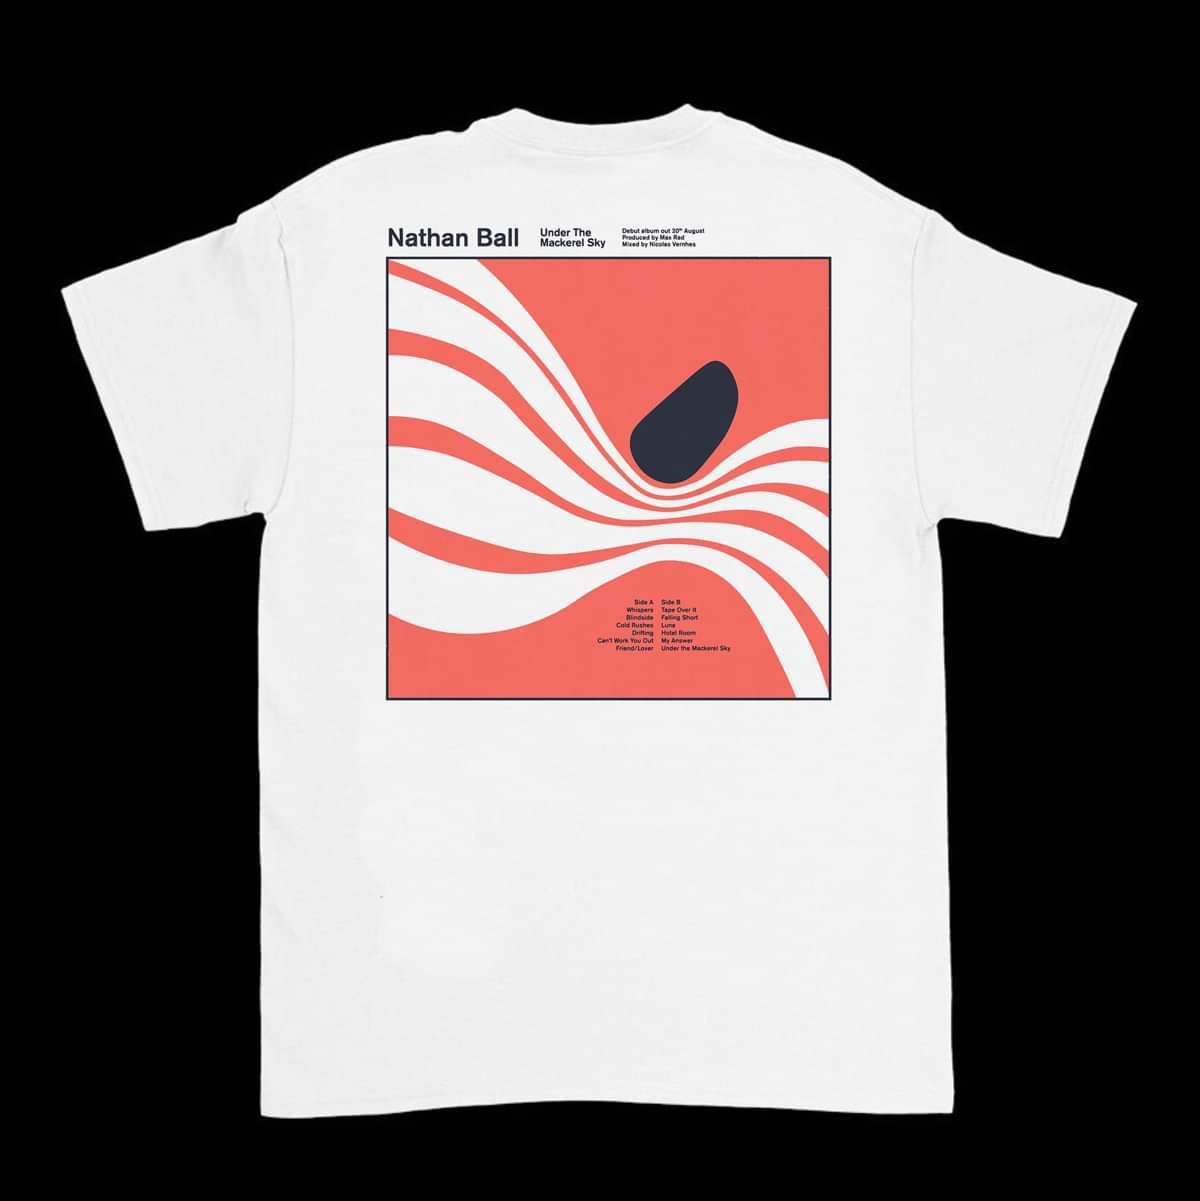 Under The Mackerel Sky - Tee Shirt - Nathan Ball